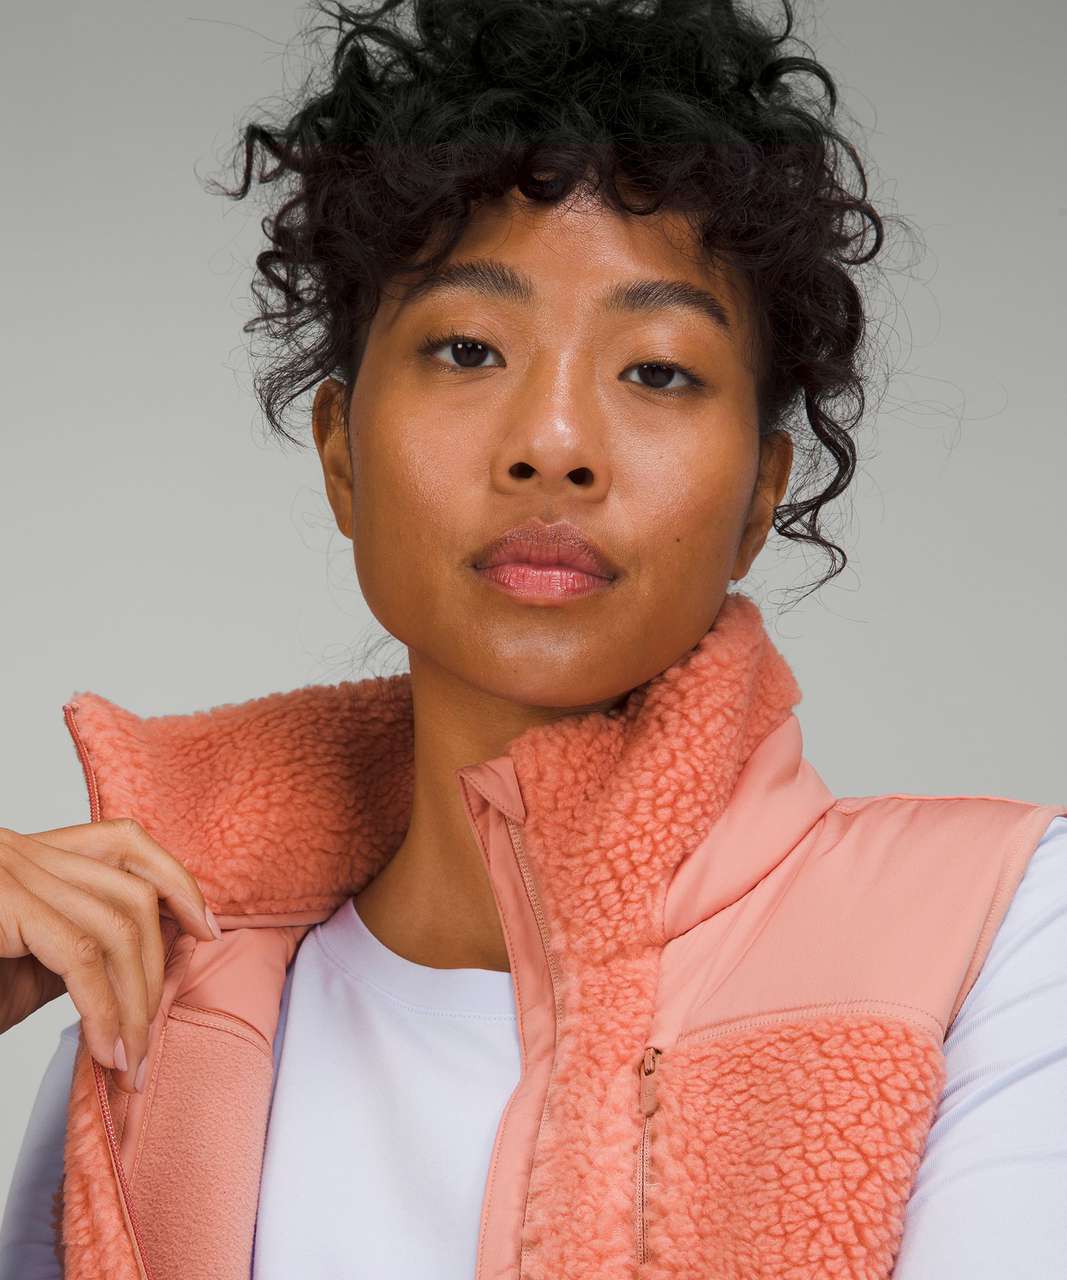 Lululemon Textured Fleece Full-Zip Vest - Pink Savannah